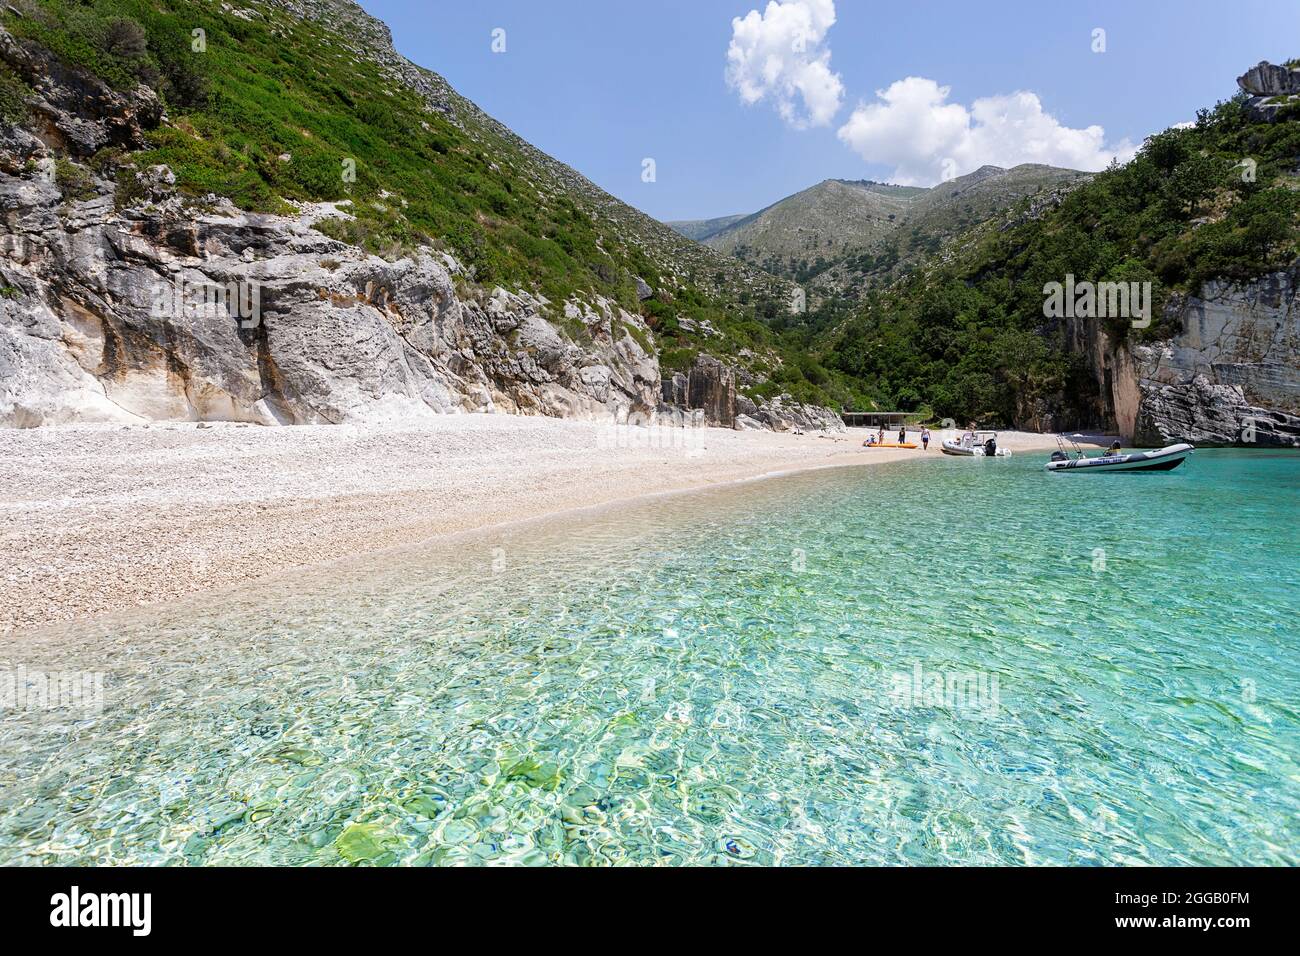 Tourists relaxing on a beautiful and remote beach in Grama Bay on isolated Karaburun Peninsula, Albania, Europe Stock Photo